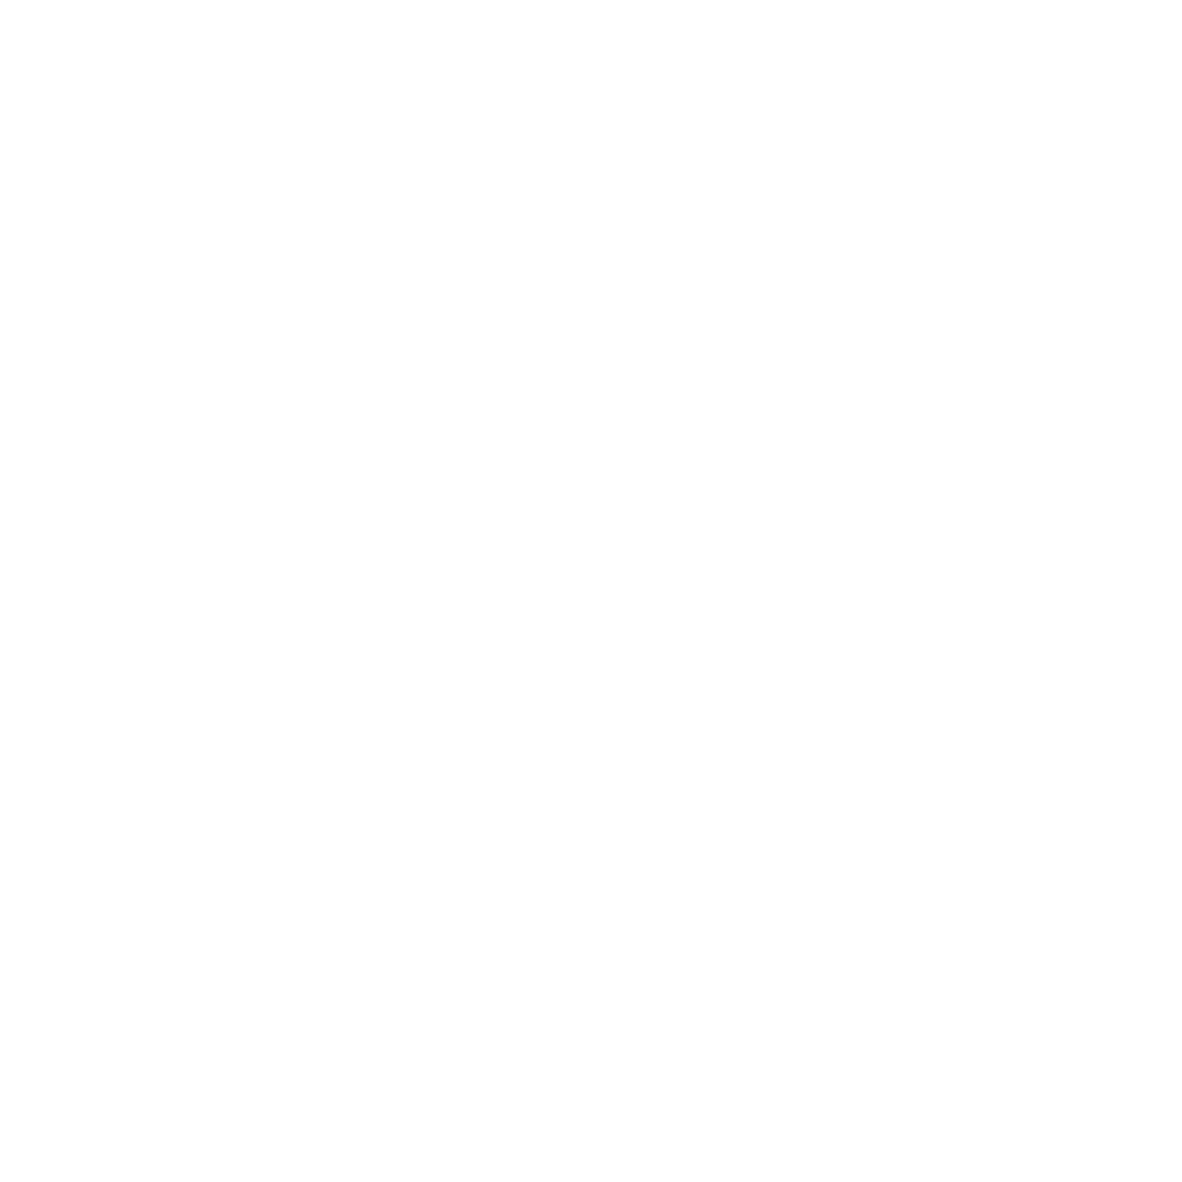 LOGO One World Radio white